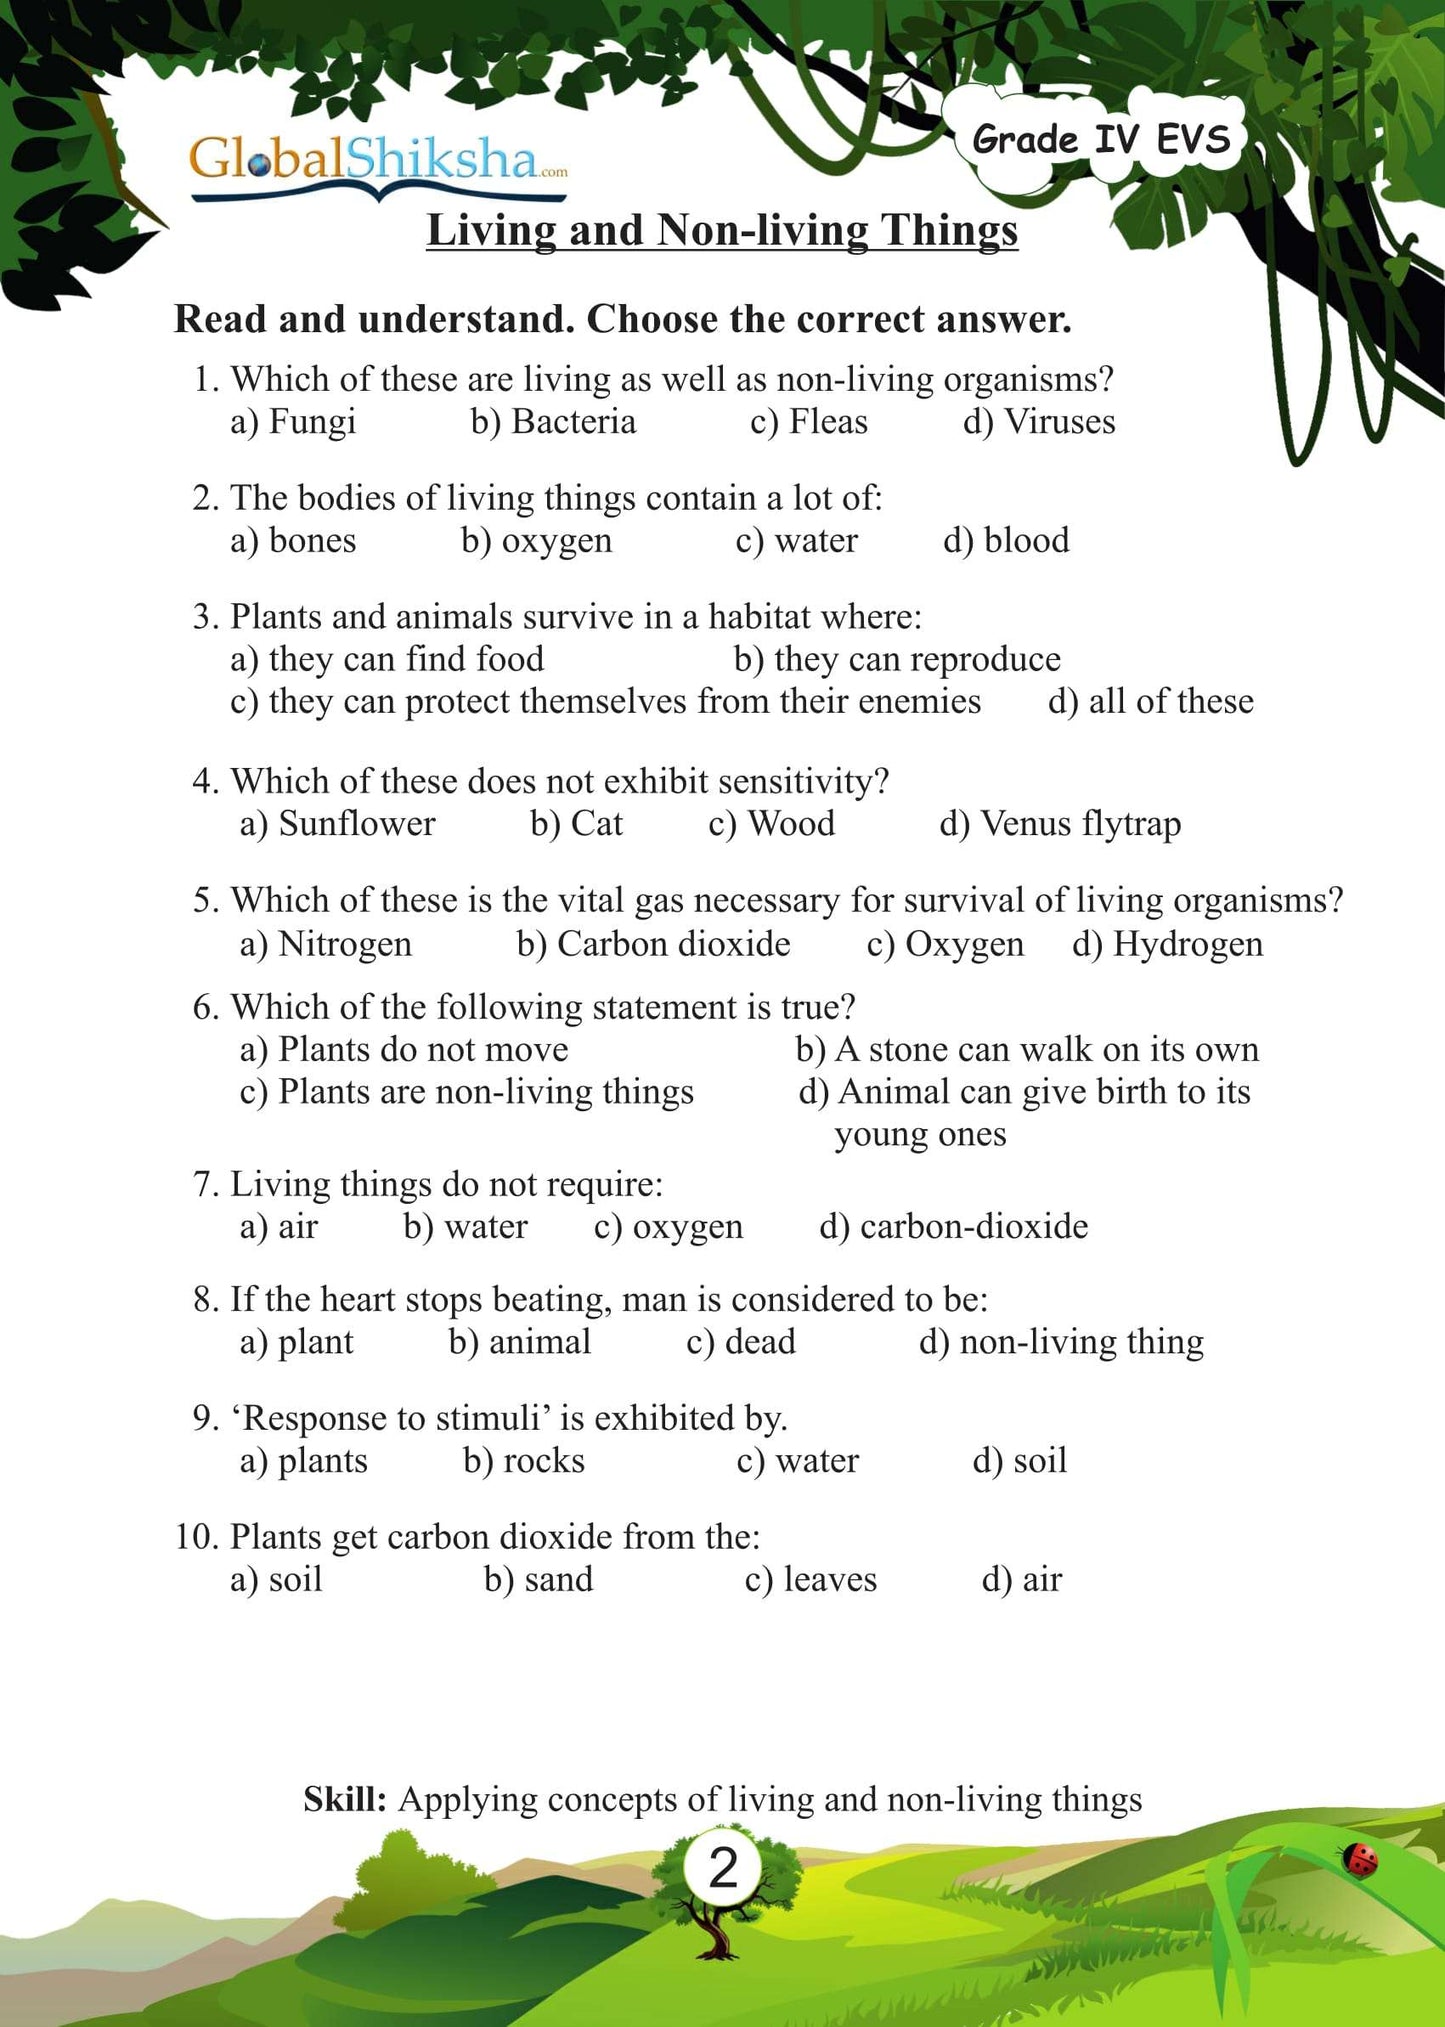 Printed Worksheets for Class 4 - Environmental Science (EVS)  ( 80 worksheet + 1 parental manual )